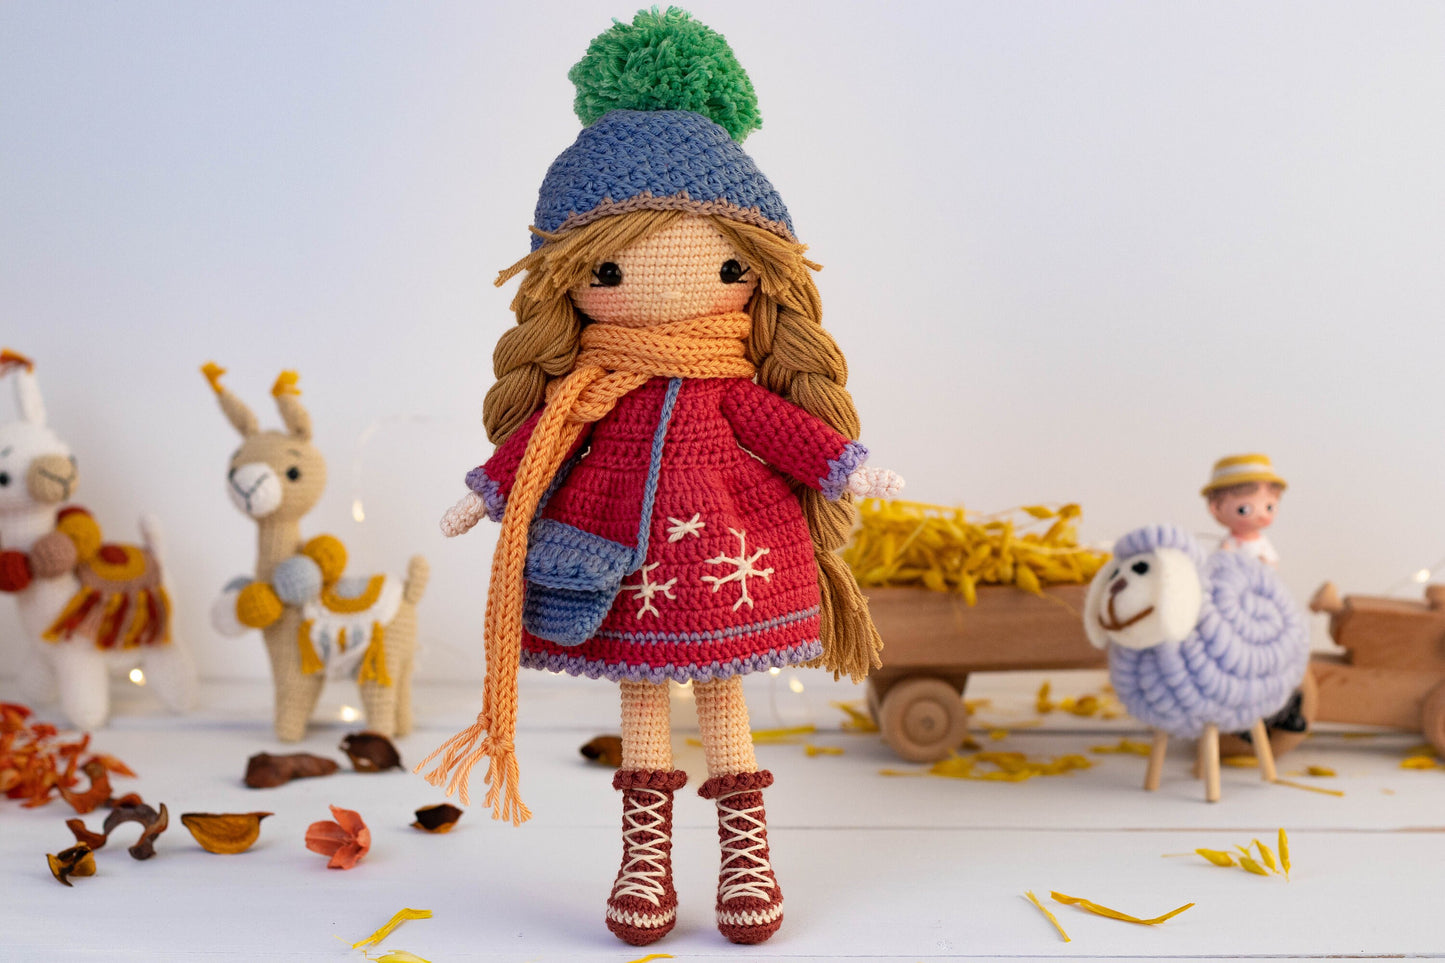 Crochet Doll, Winter Doll, Amigurumi Doll For Sale, Knit Doll, Handmade Doll Finished, Homemade Doll, Hand Made Doll, Hand Knit Doll, Gift